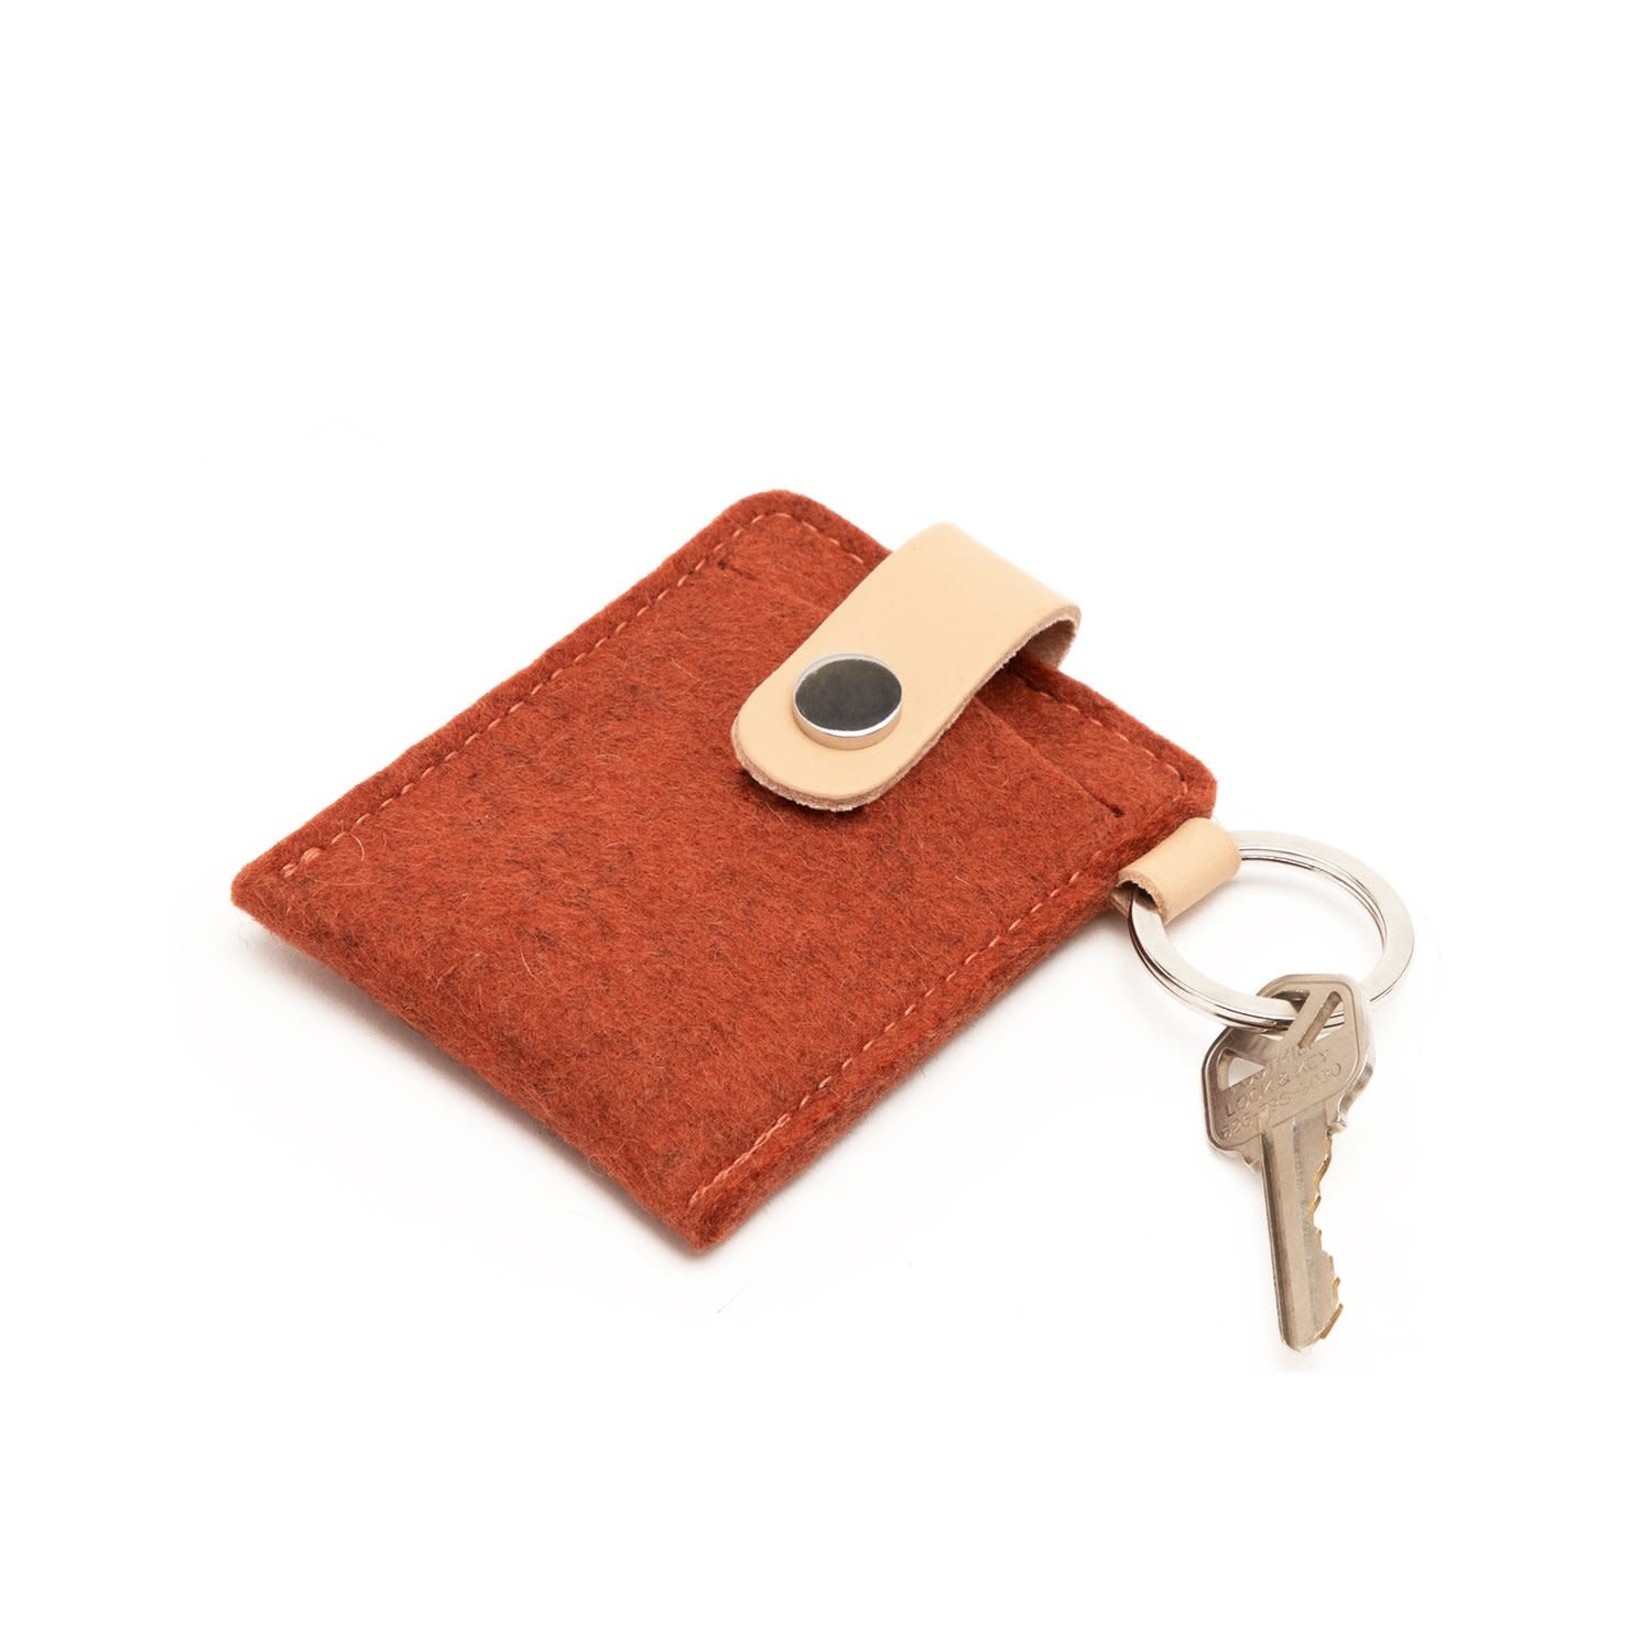 Felt Key Card + Leather Case